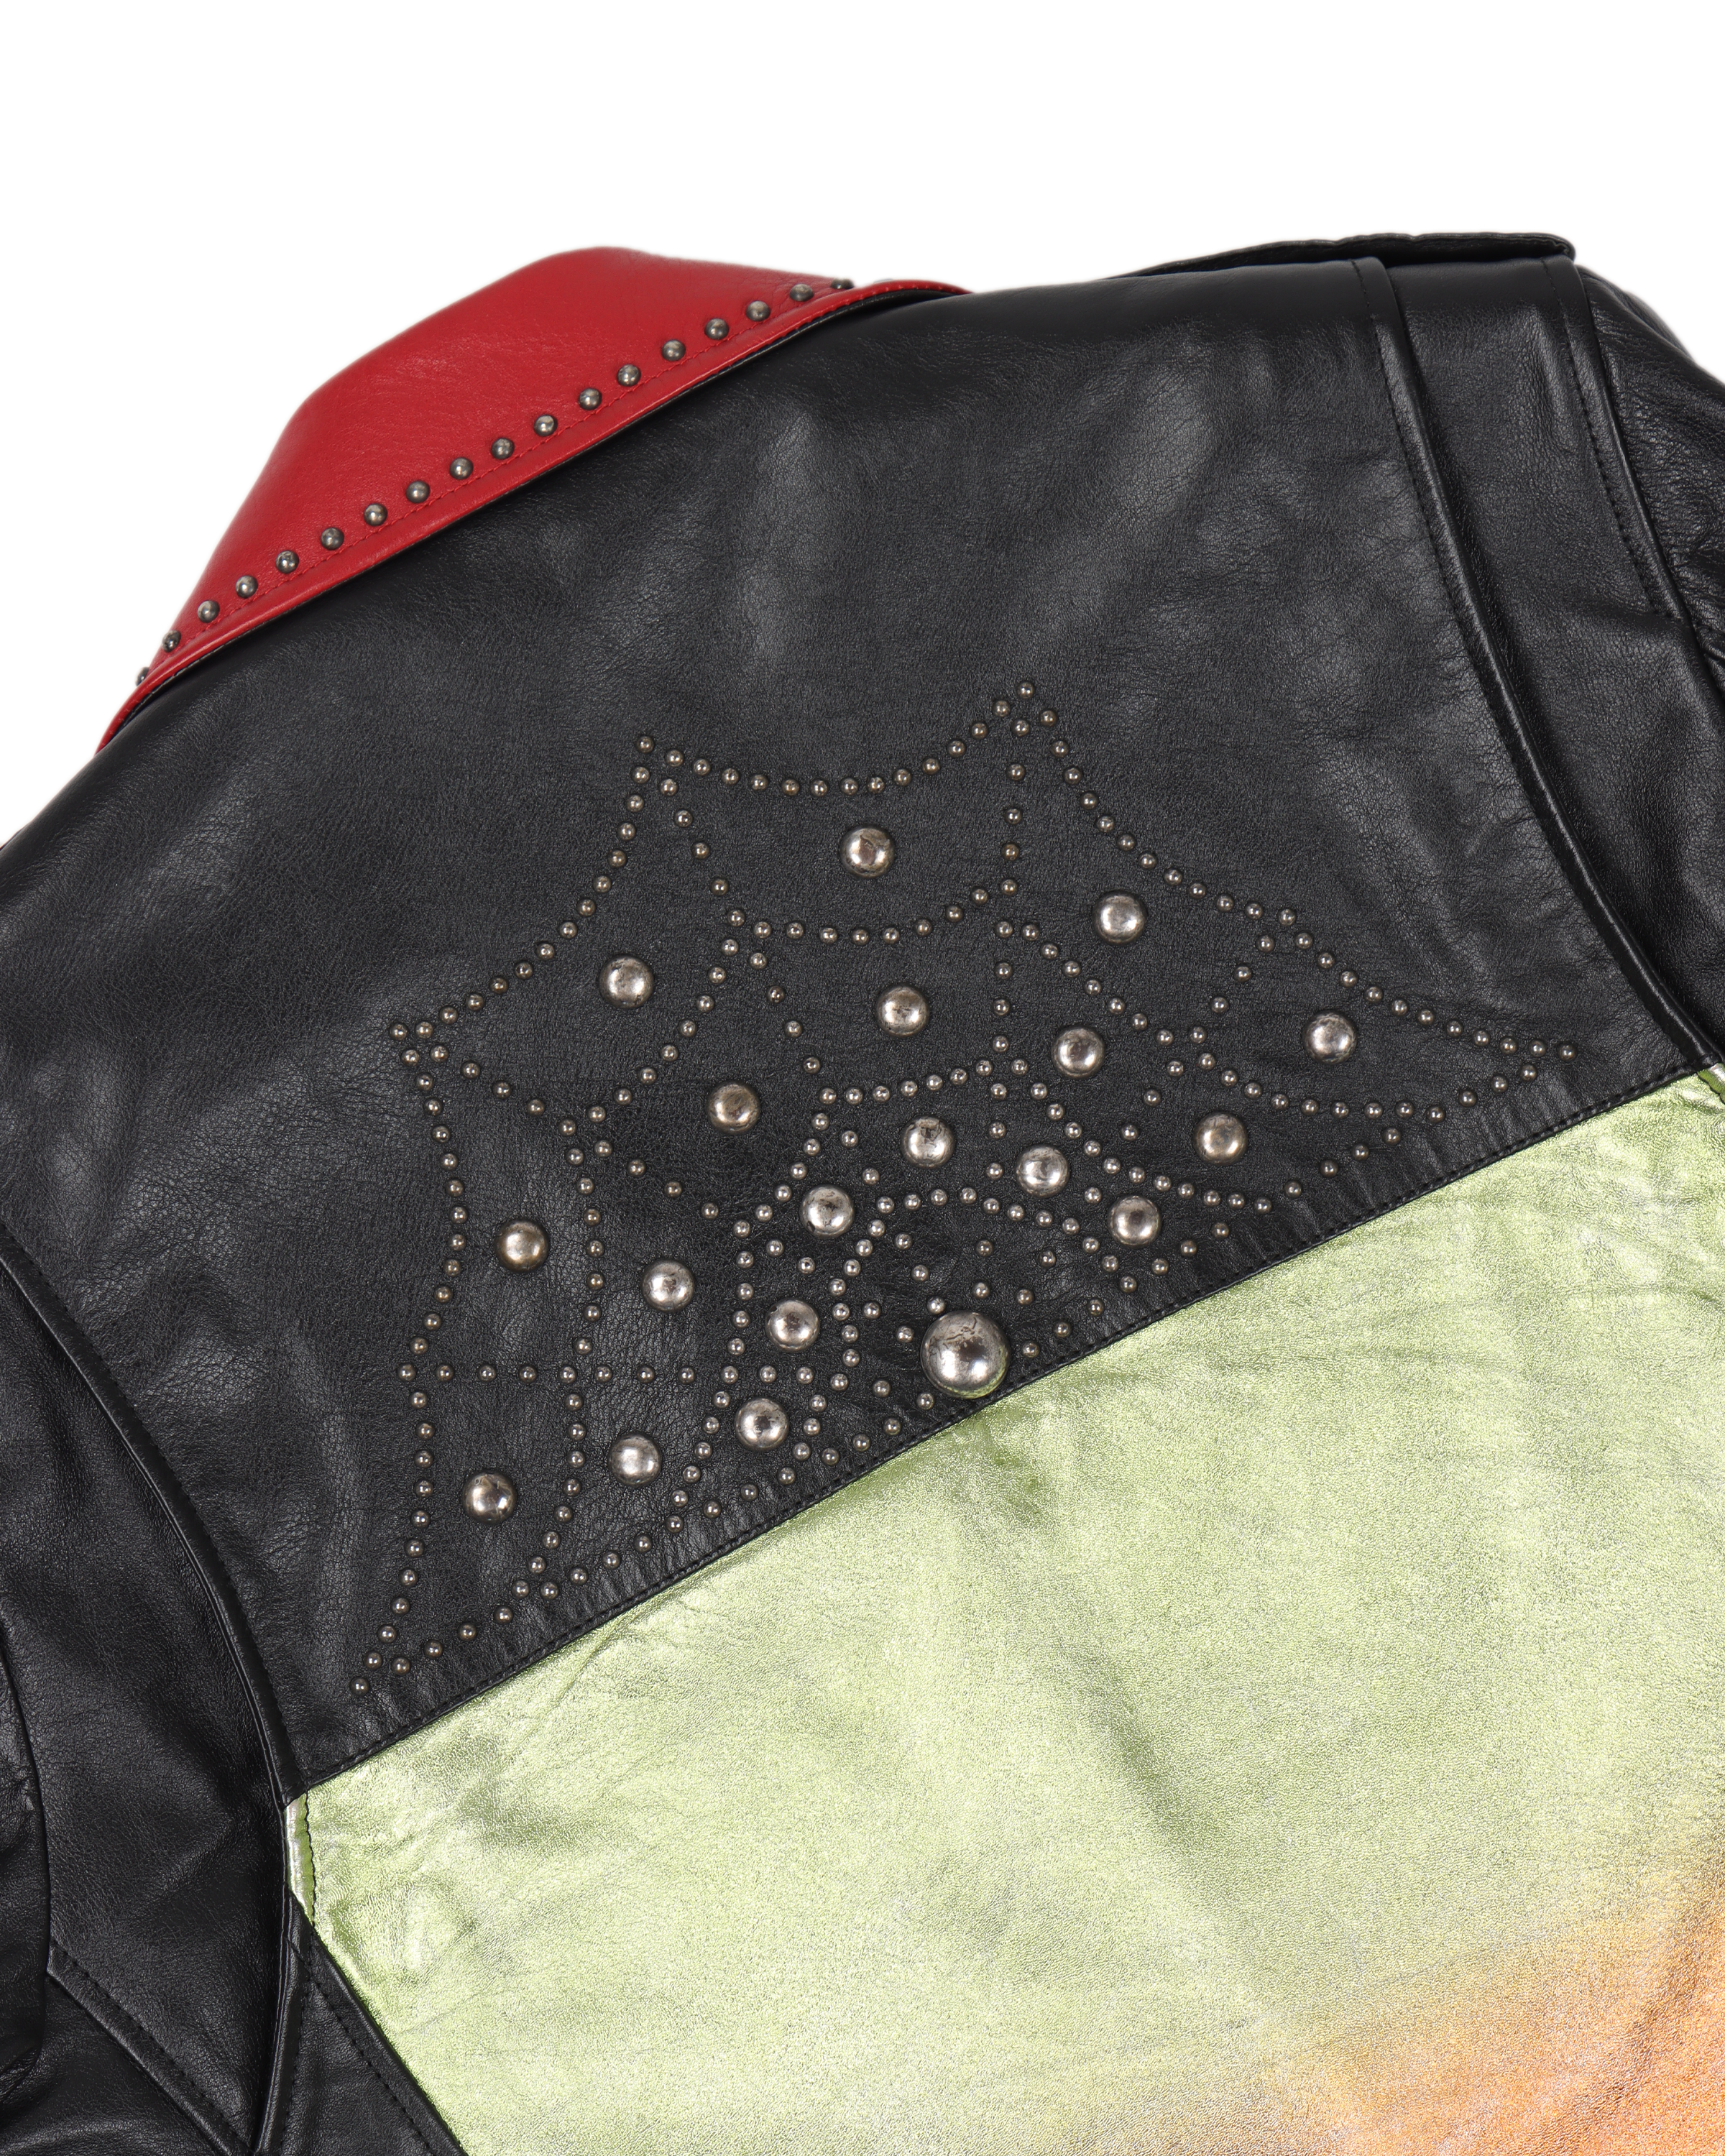 SS15 Motorcycle Degrade Sunset Leather Jacket